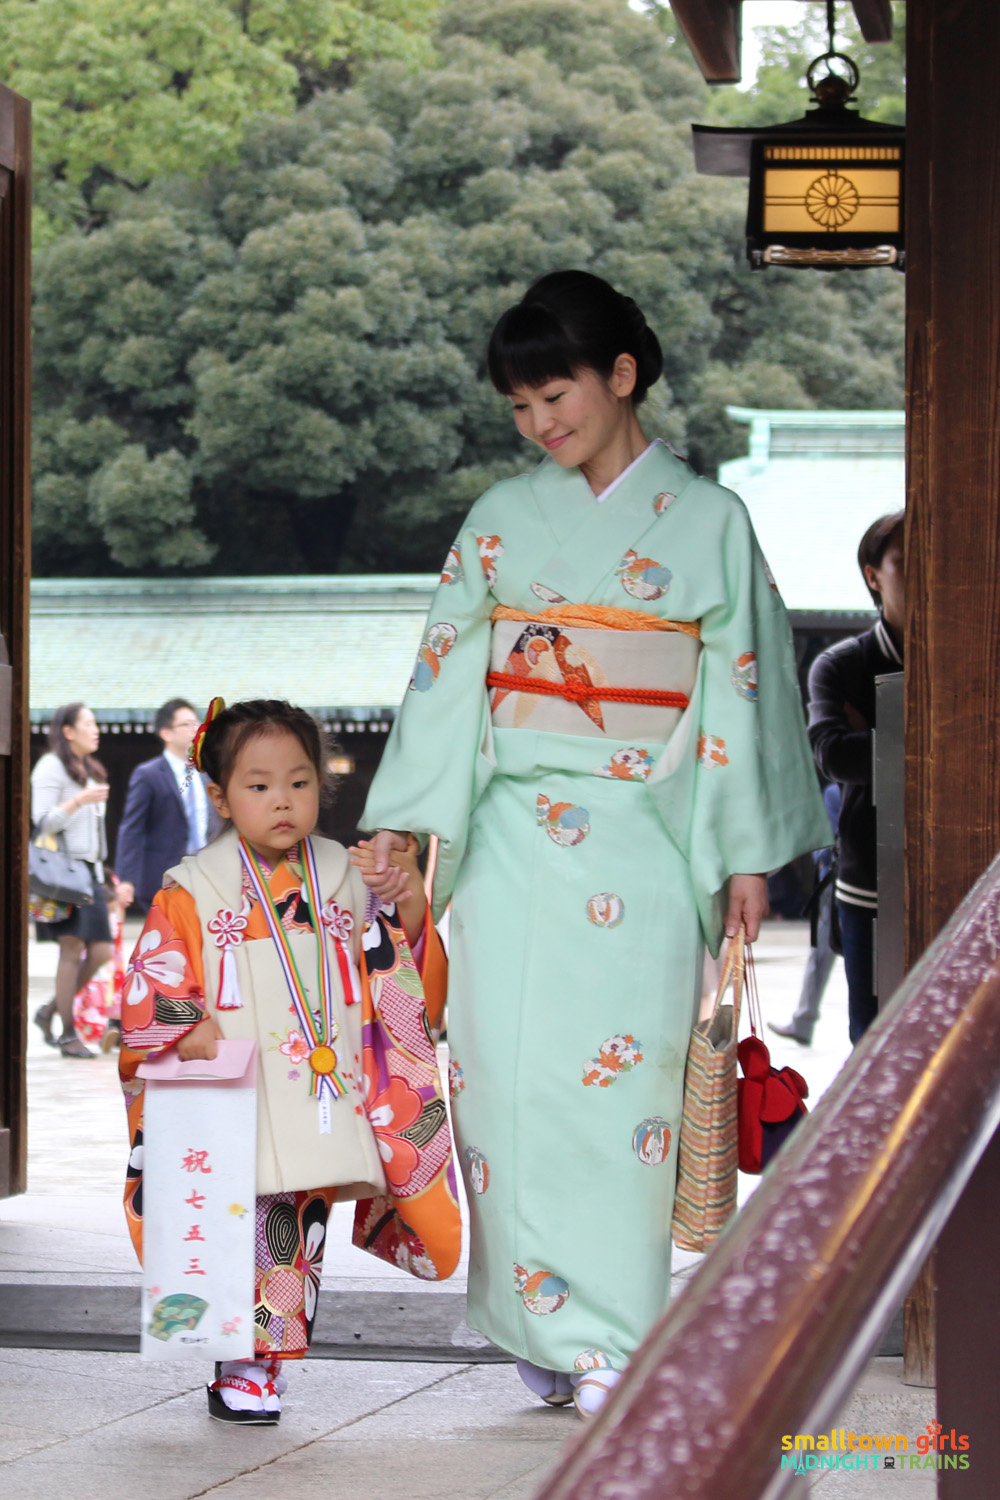 SGMT Japan Tokyo Meiji Shrine 04 mother and daughter